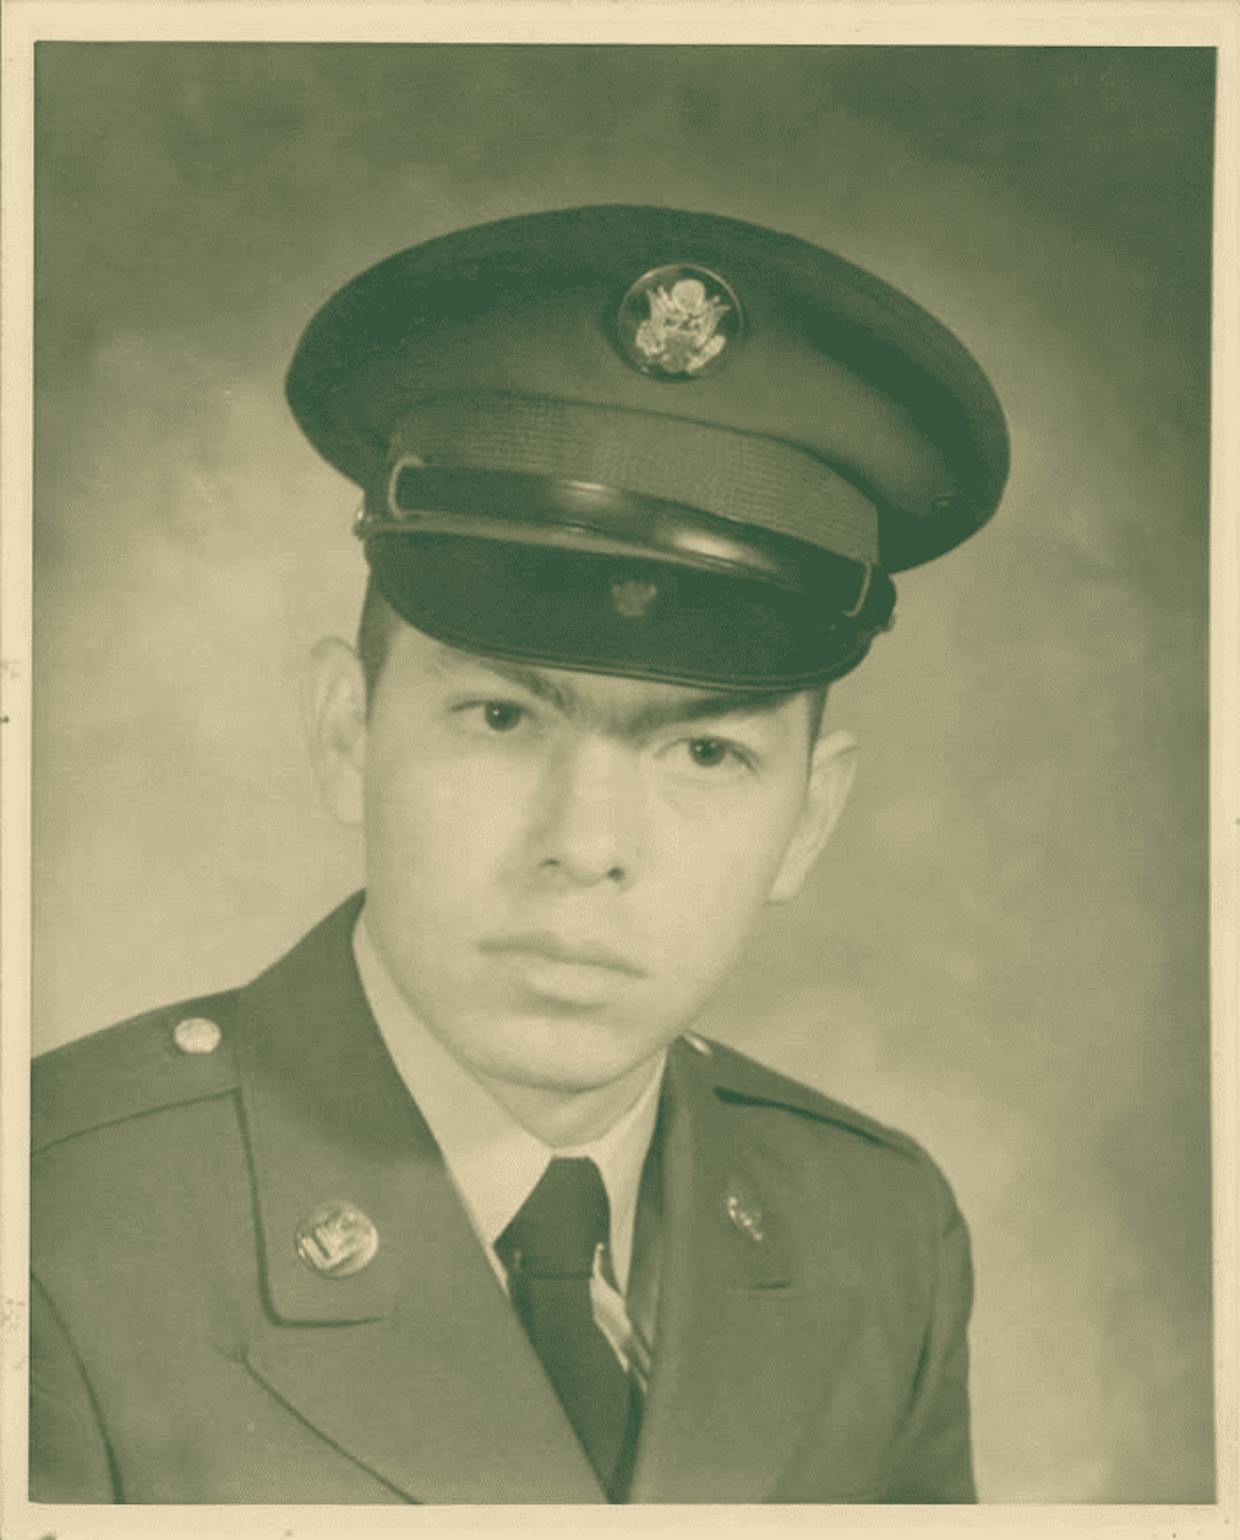 My father, Joel Vela, in uniform